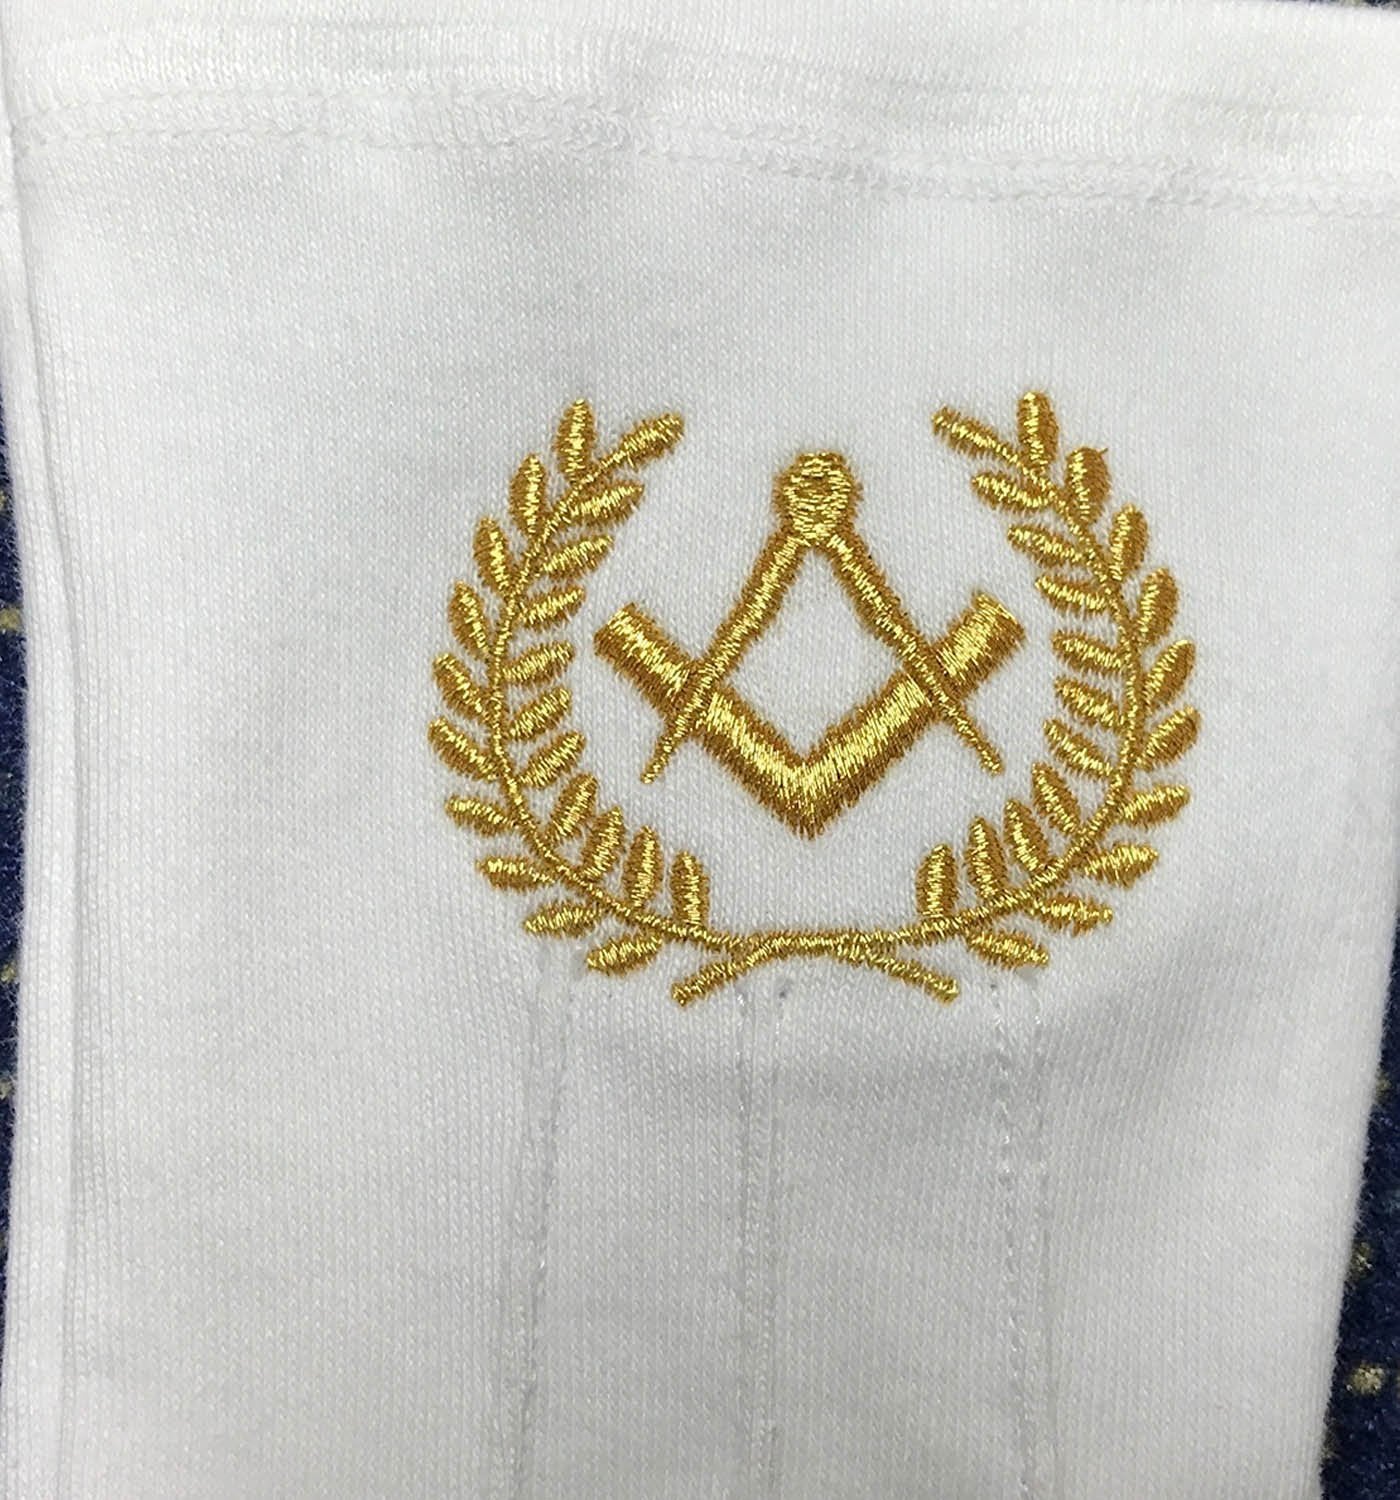 Master Mason Blue Lodge Glove - White Cotton with Gold Square & Compass - Bricks Masons